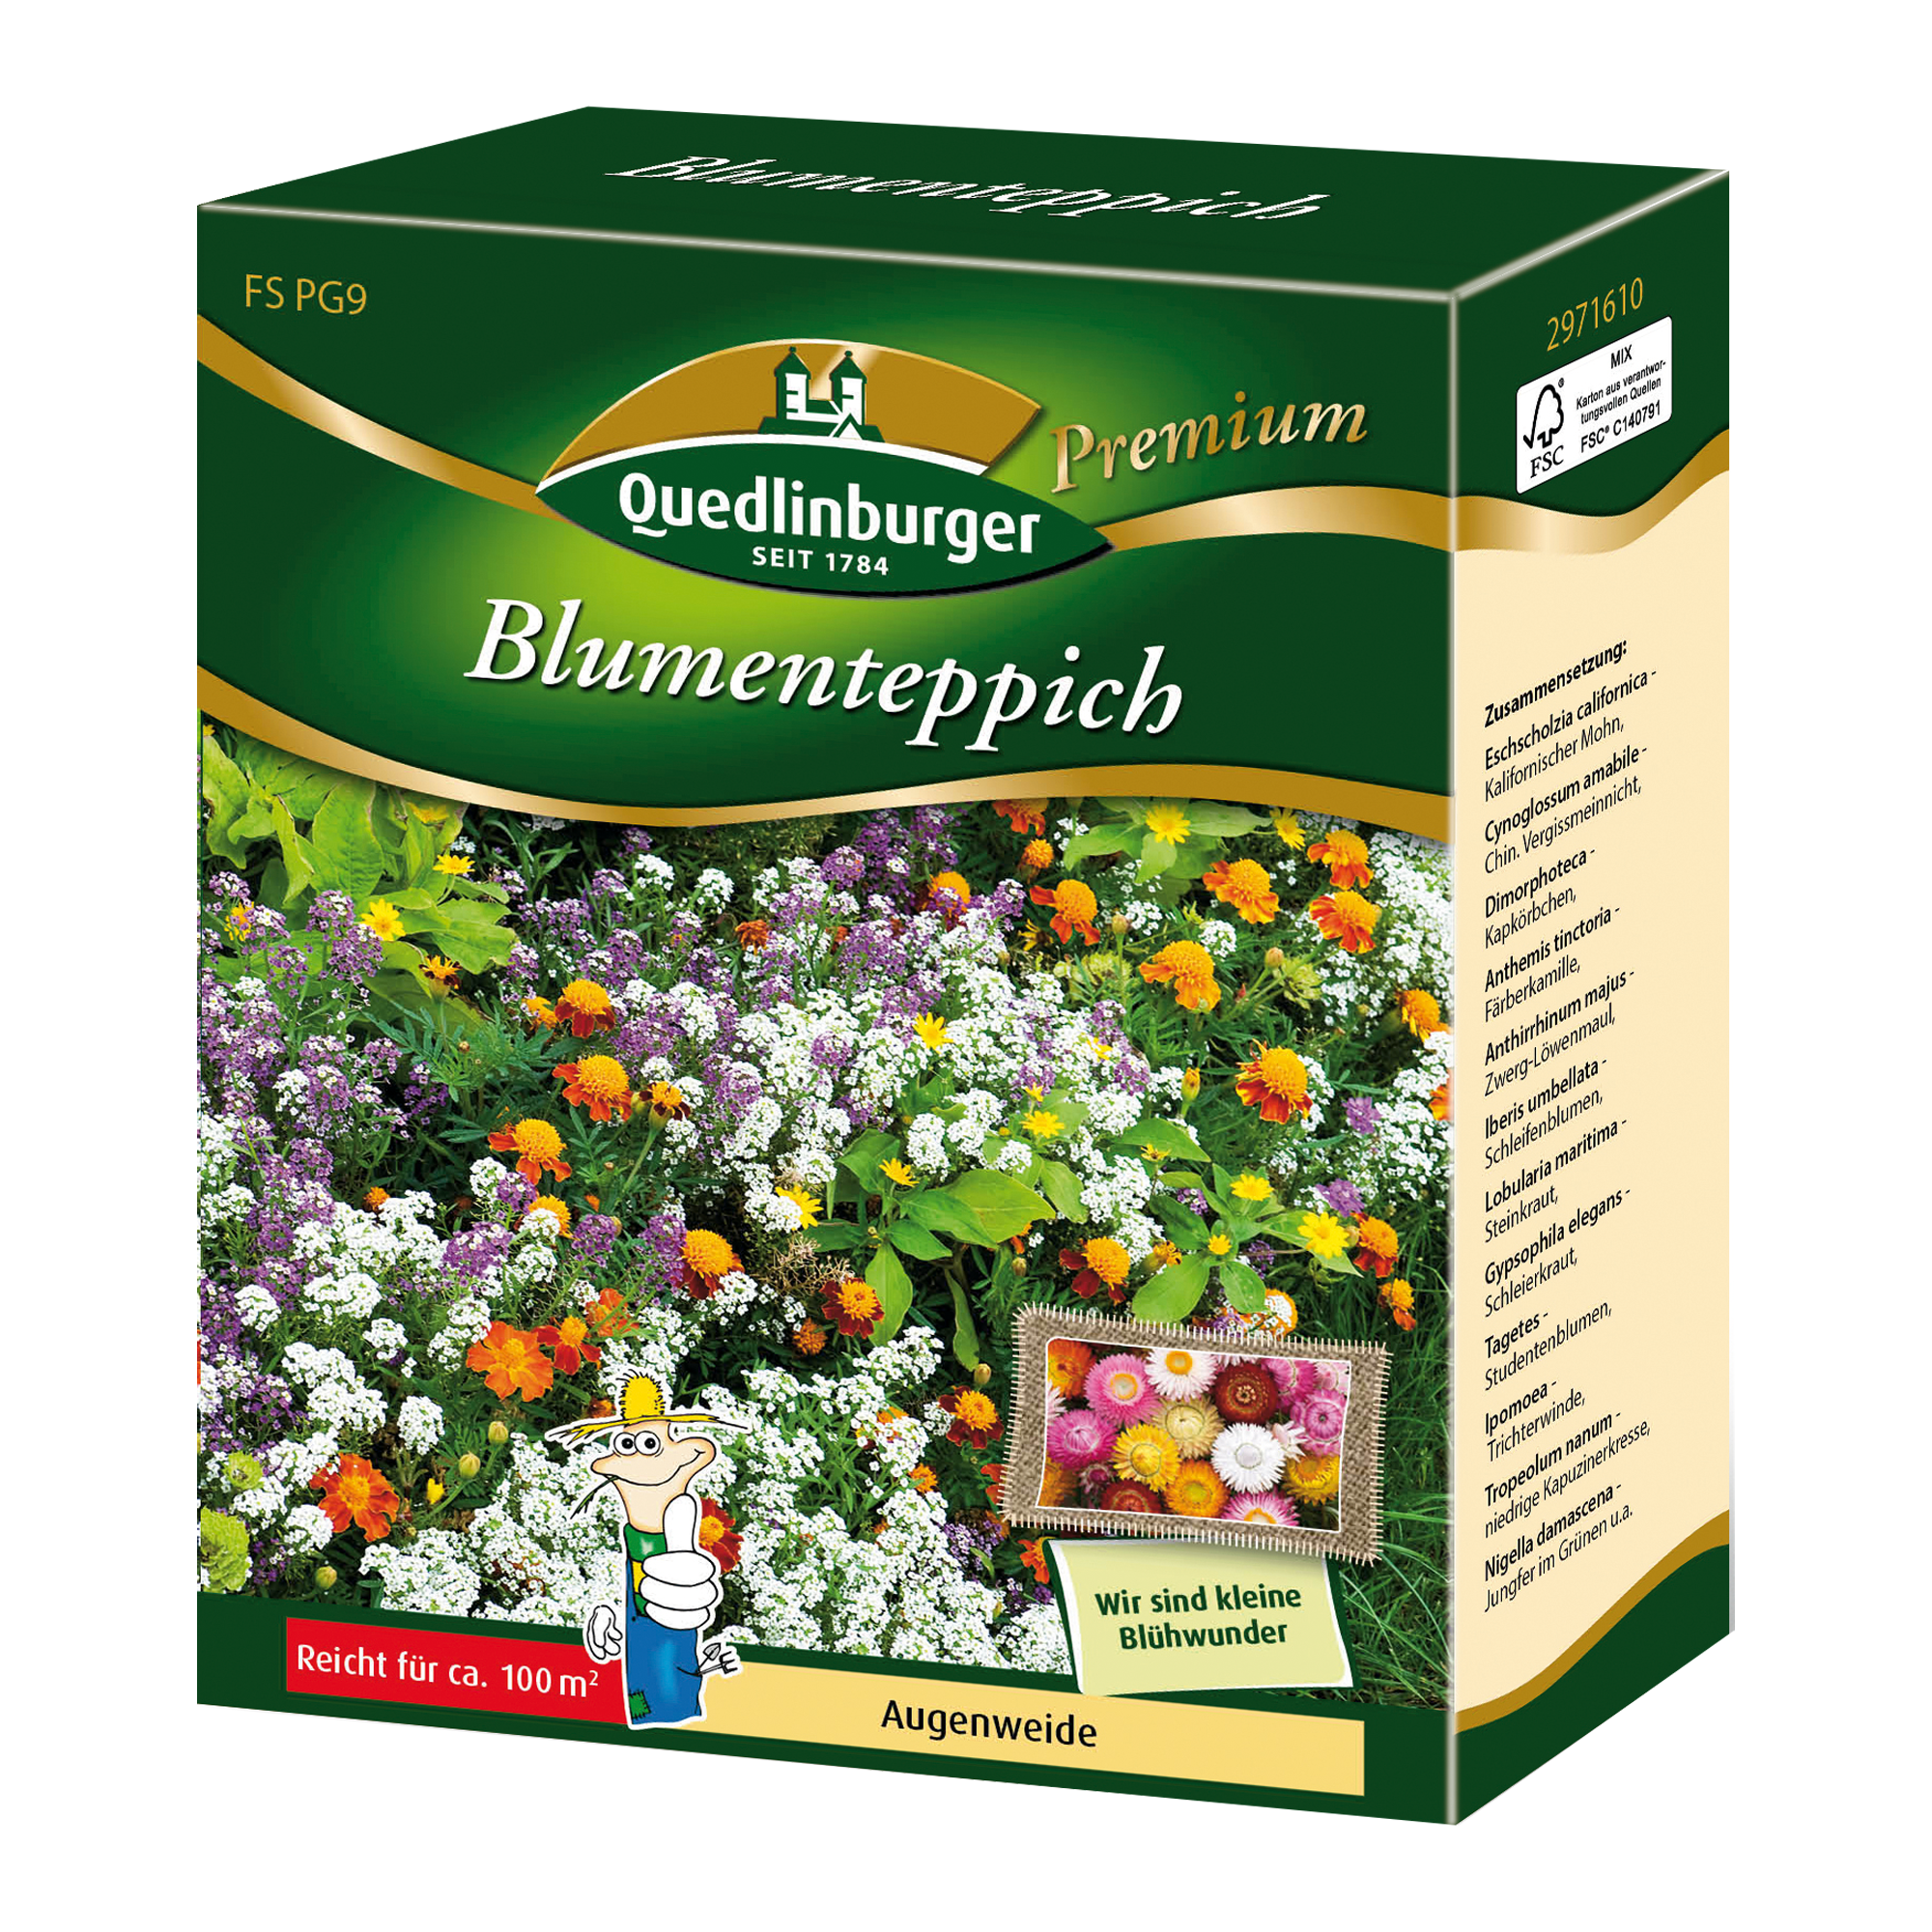 Blumenmischung 'Blumenteppich' + product picture